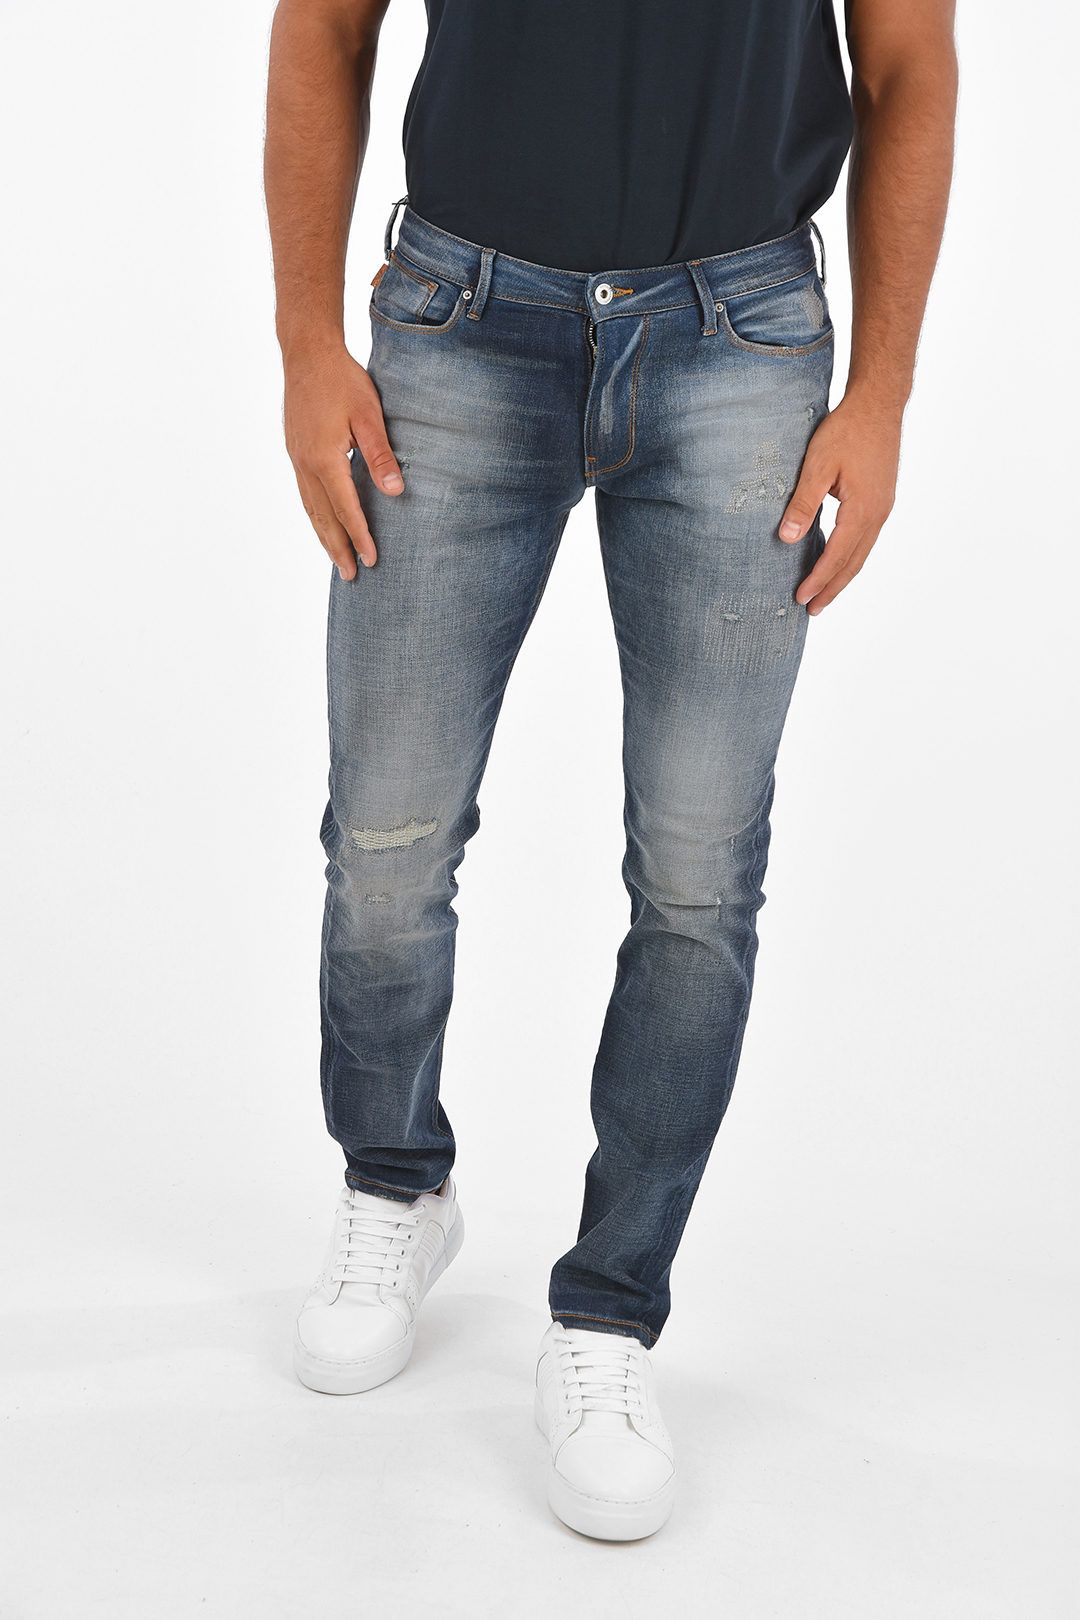 j06 jeans